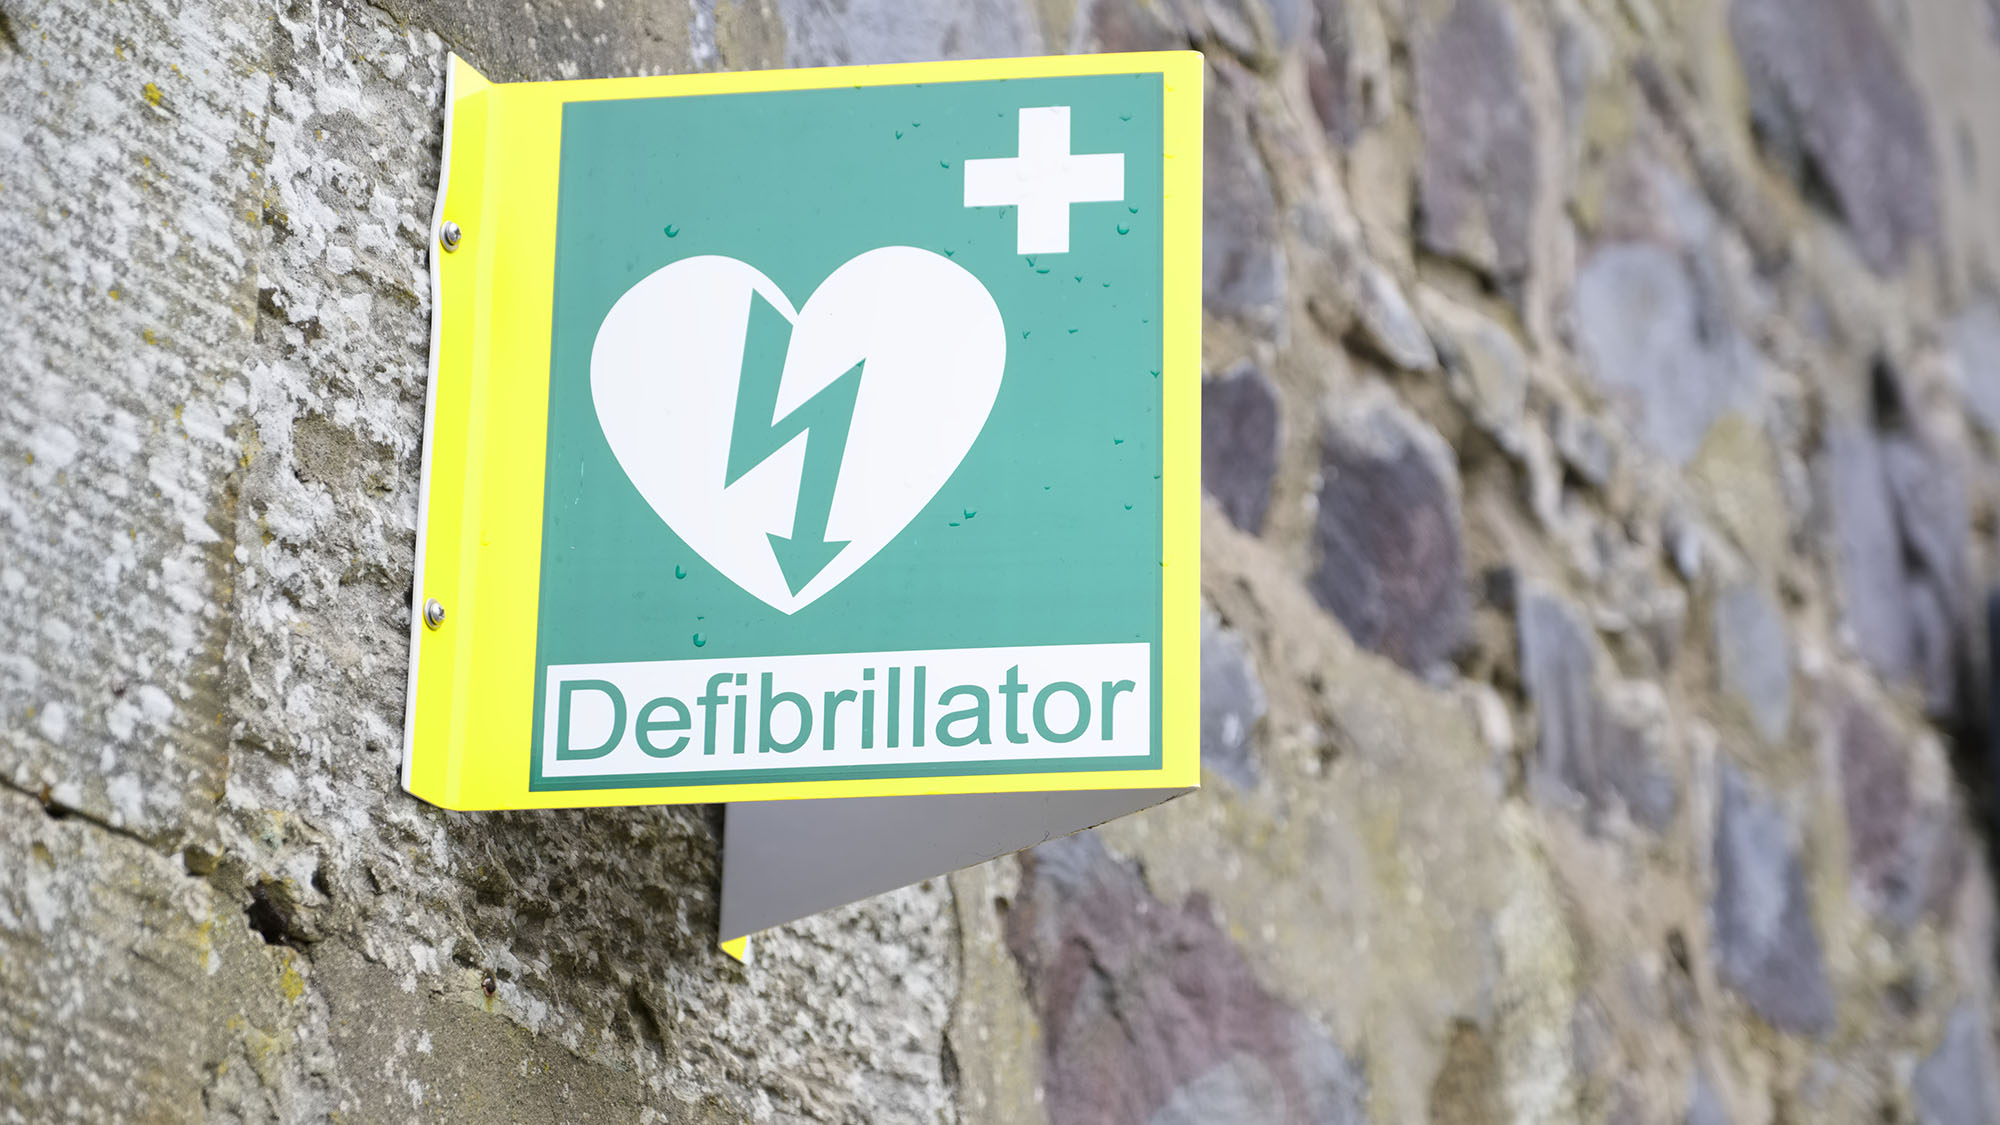 Defibrillator sign